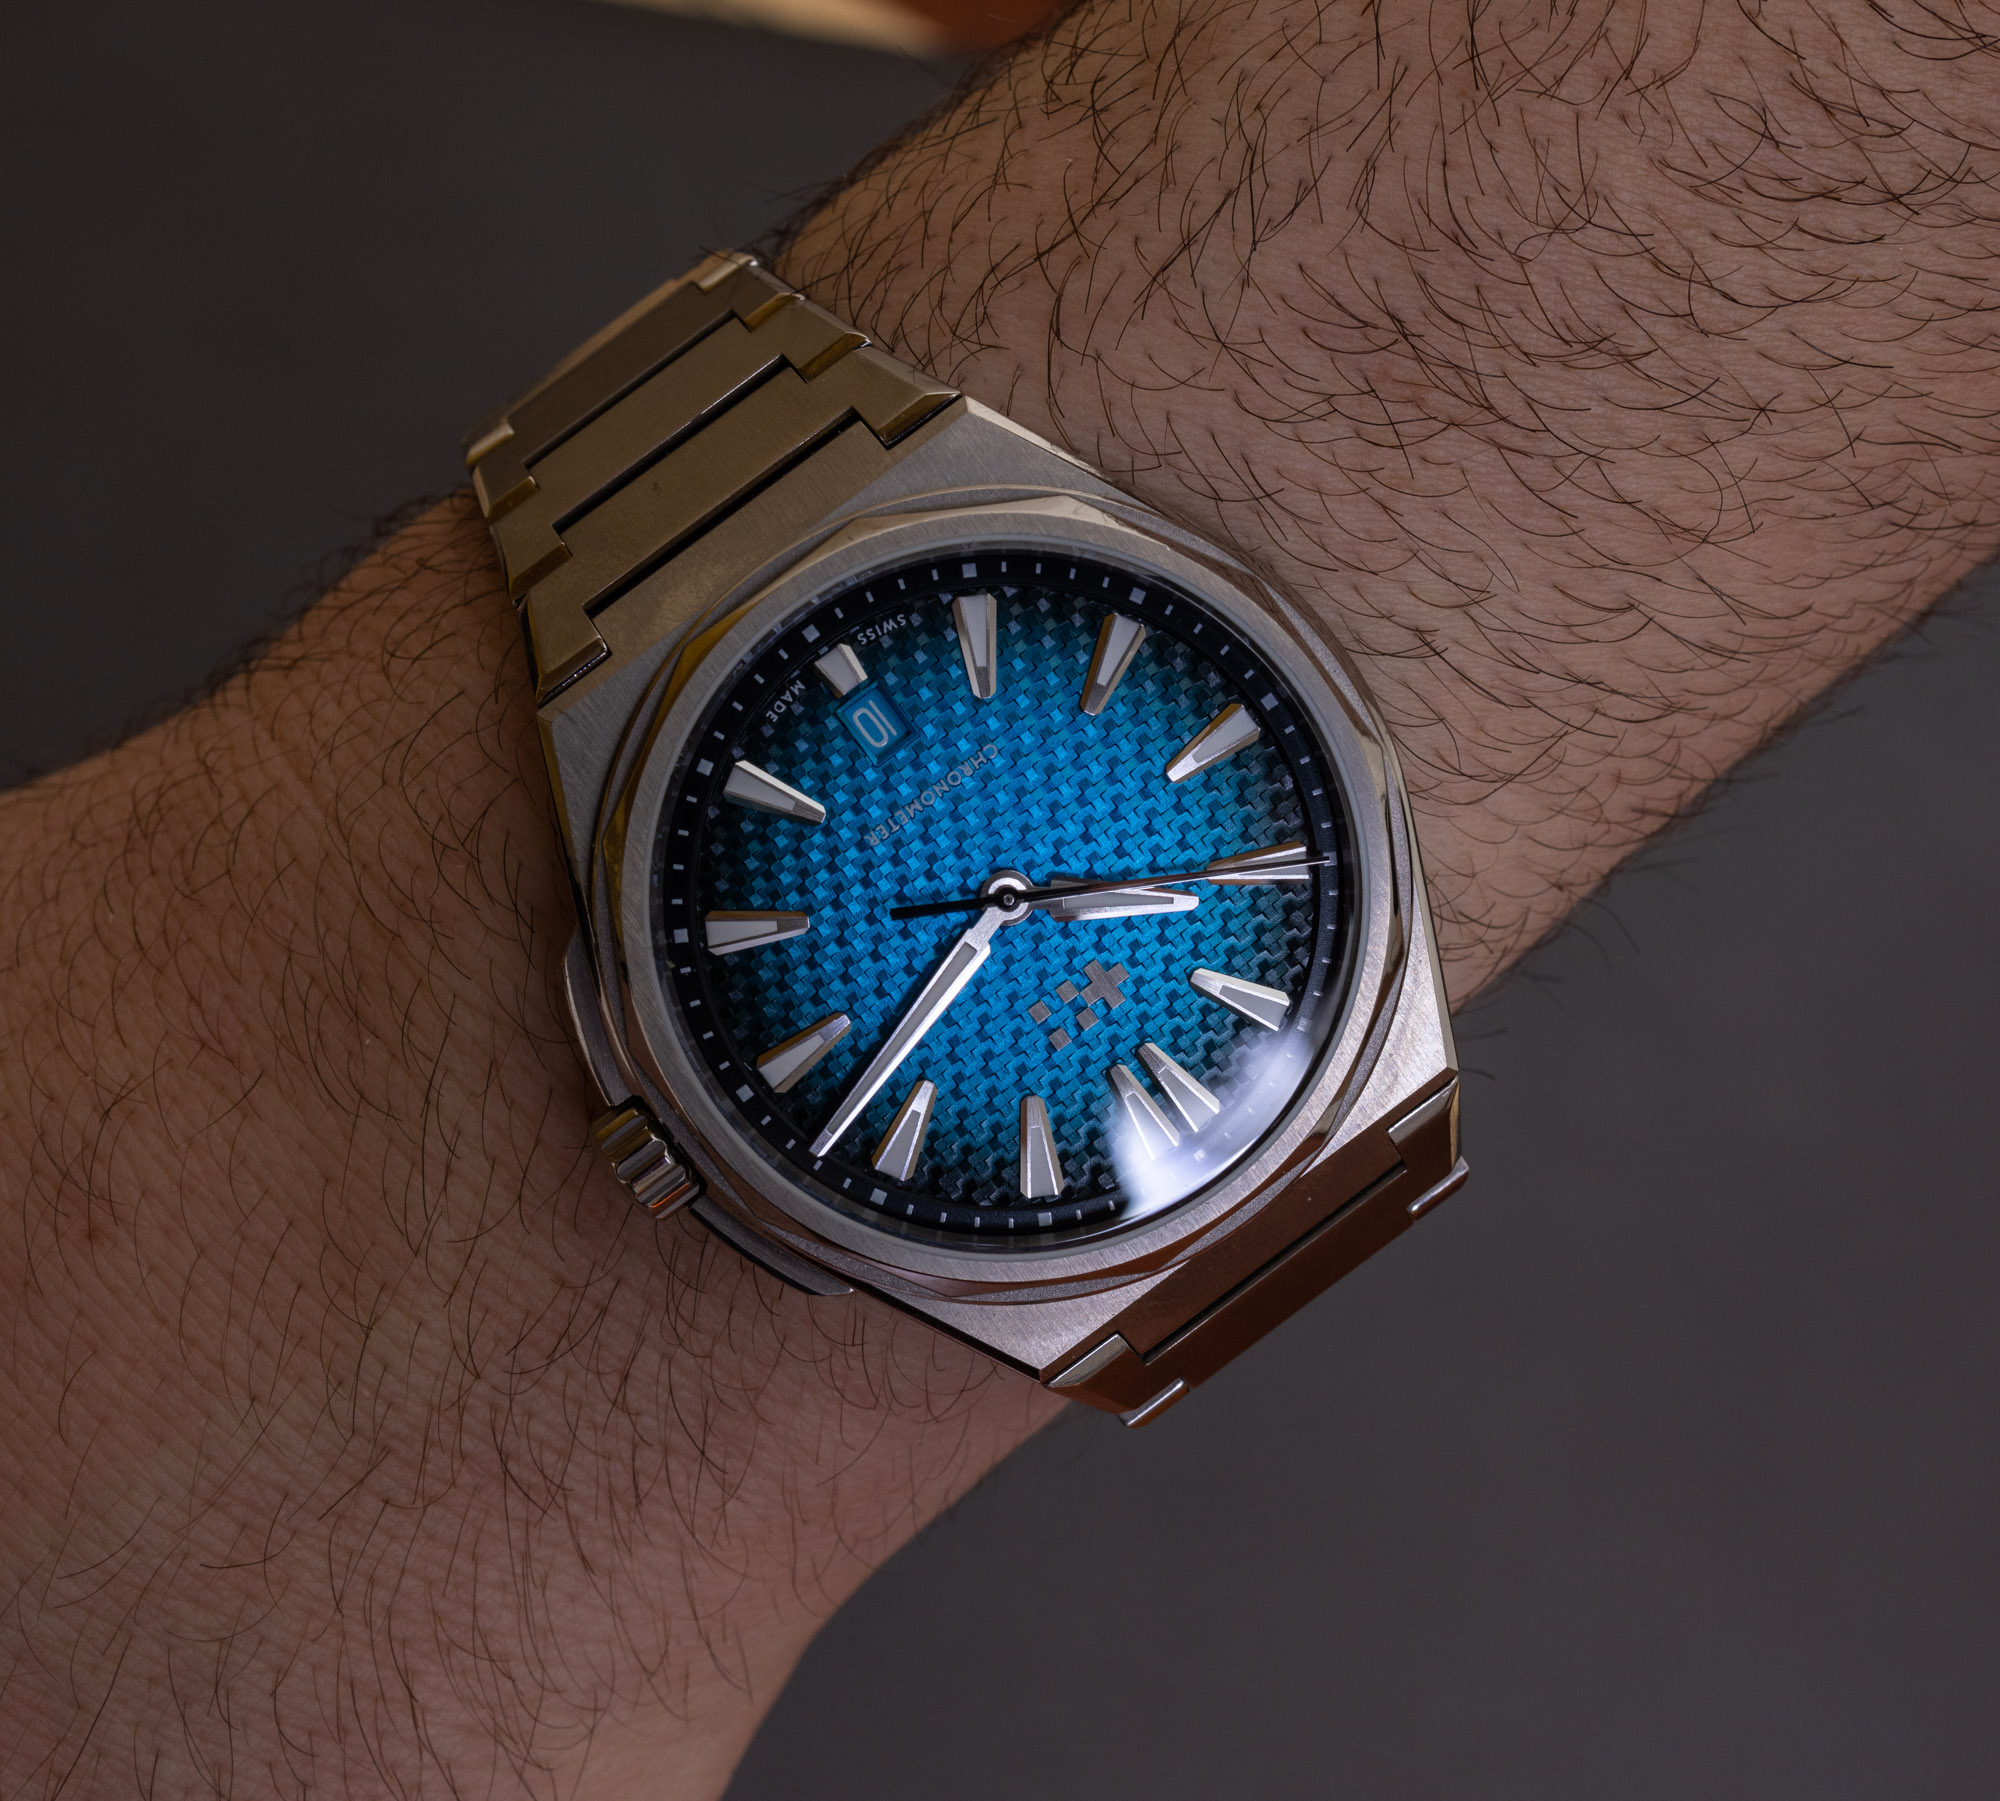 Watch Review: Christopher Ward The Twelve Titanium Chronometer Watch ...